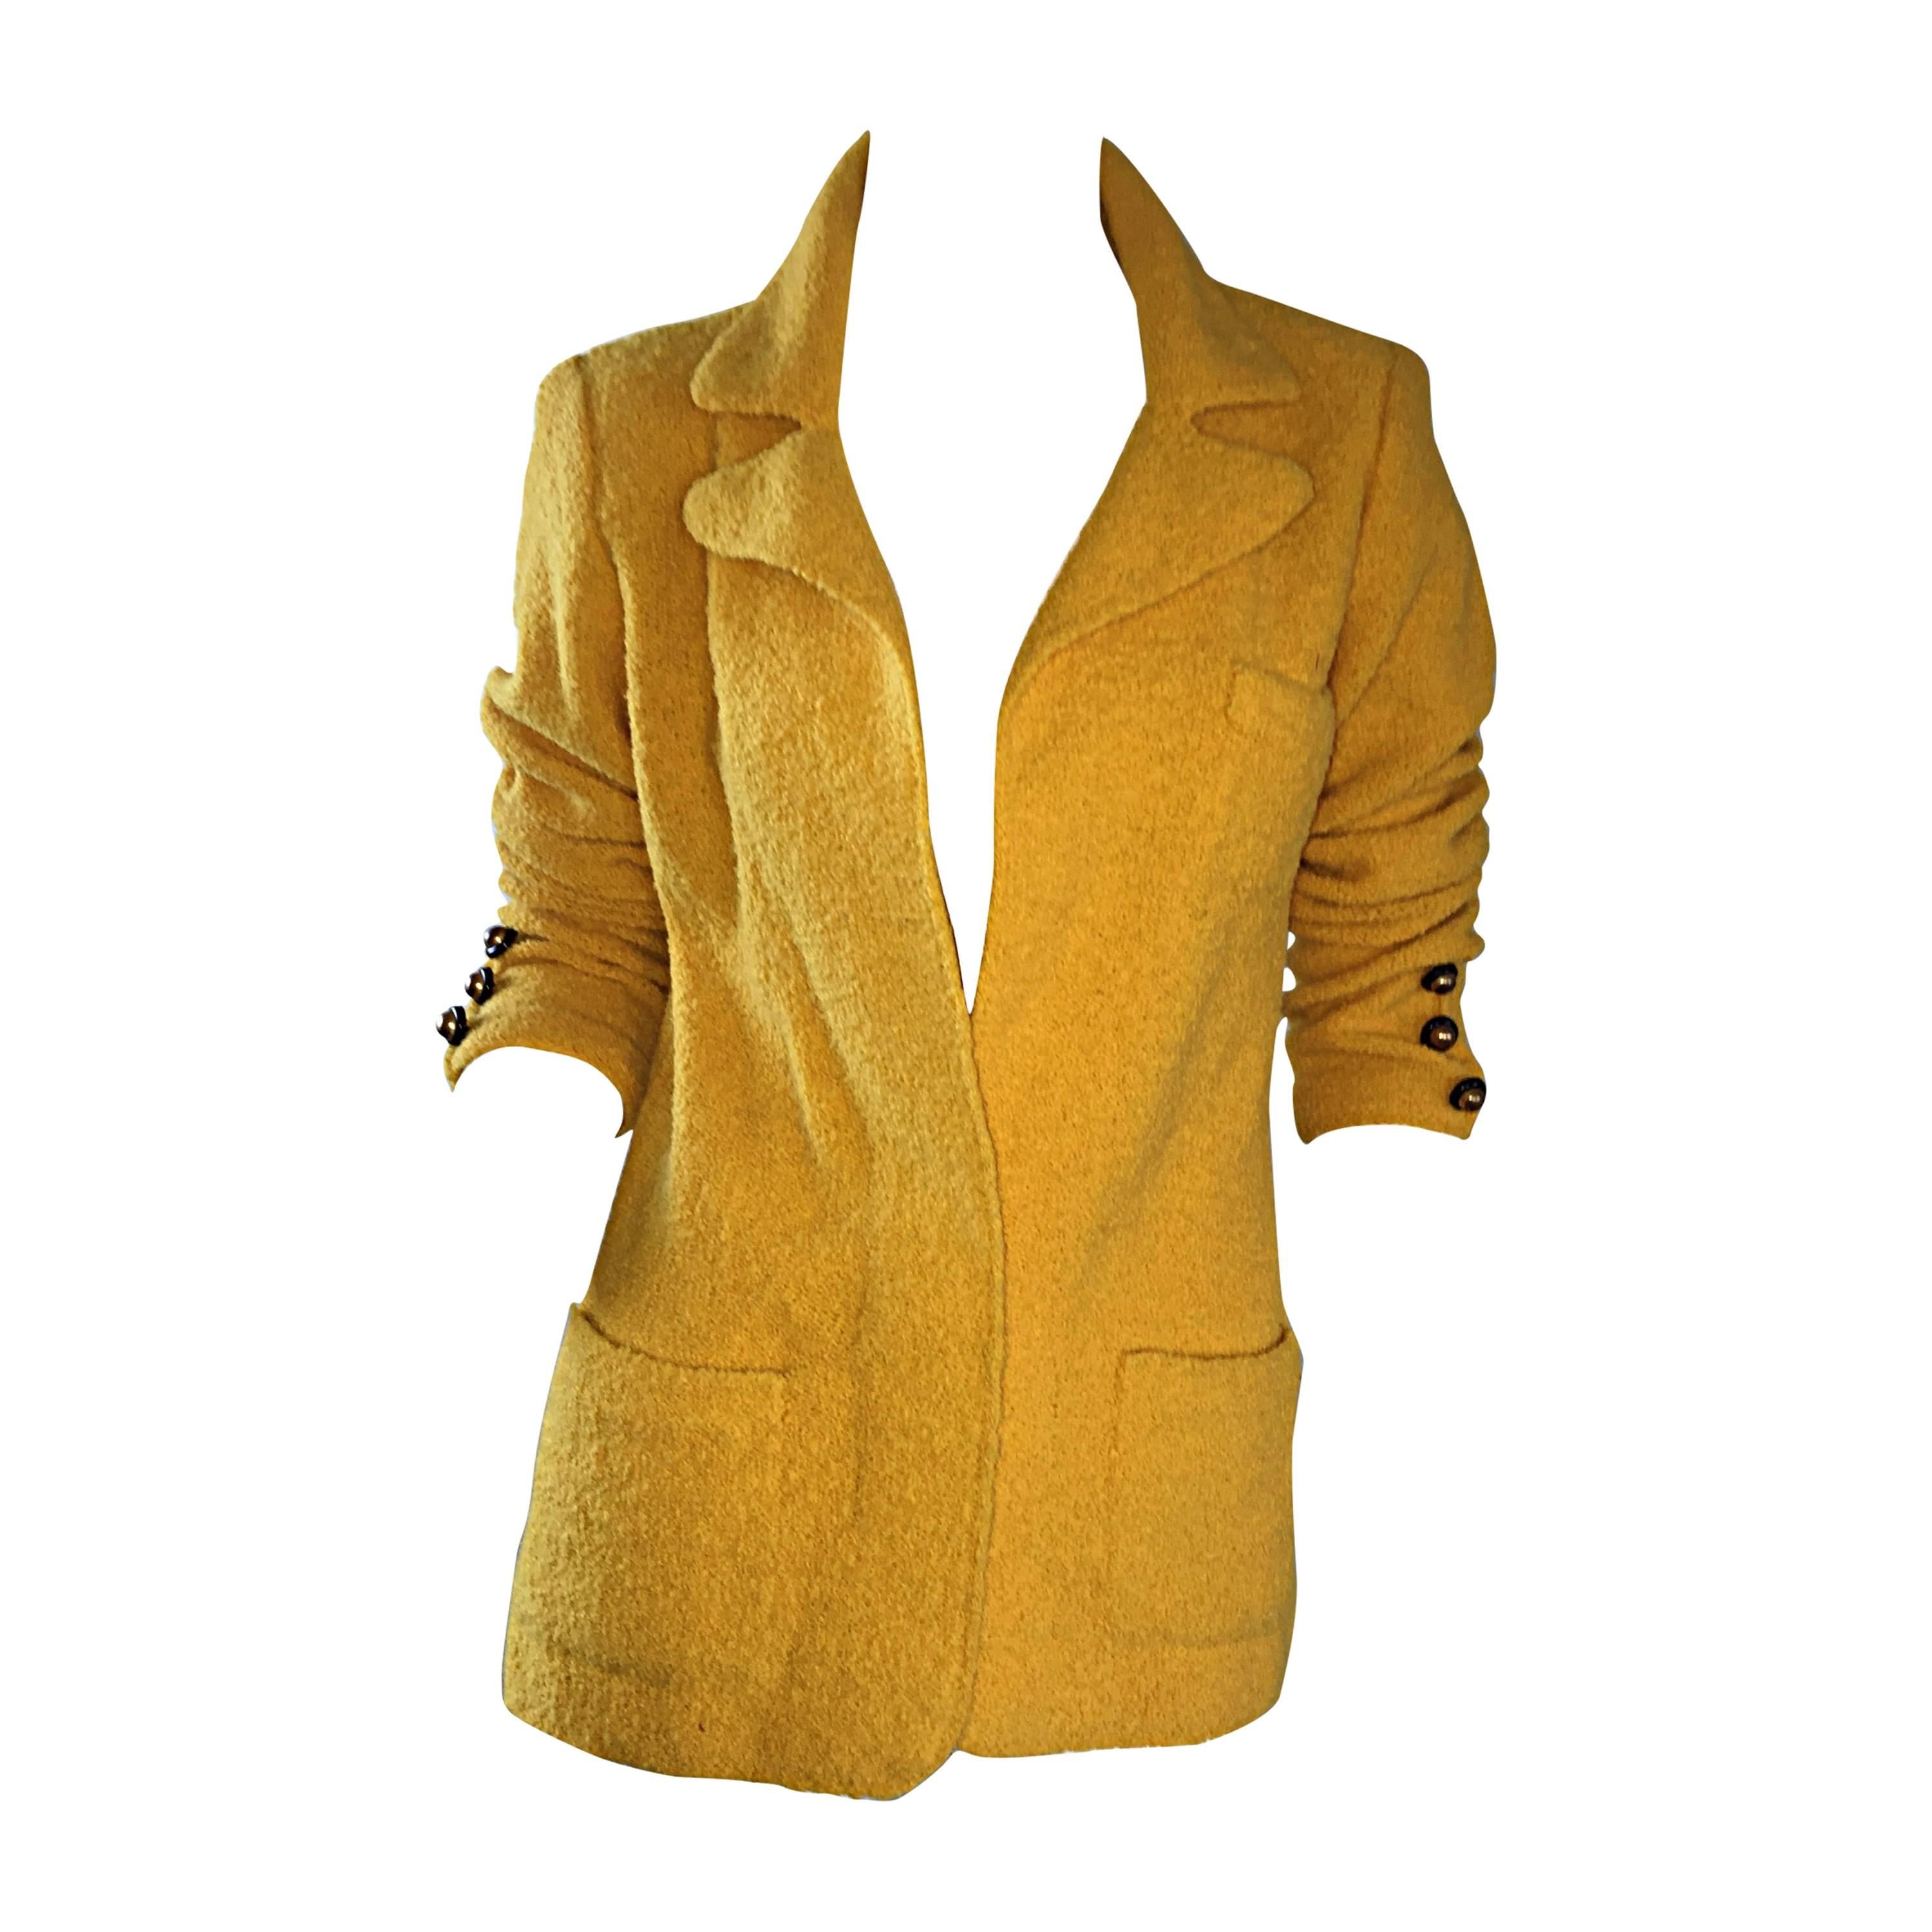 Vintage Adolfo 1970s Mustard Yellow Knit Blazer 70s Fitted Sweater Jacket 